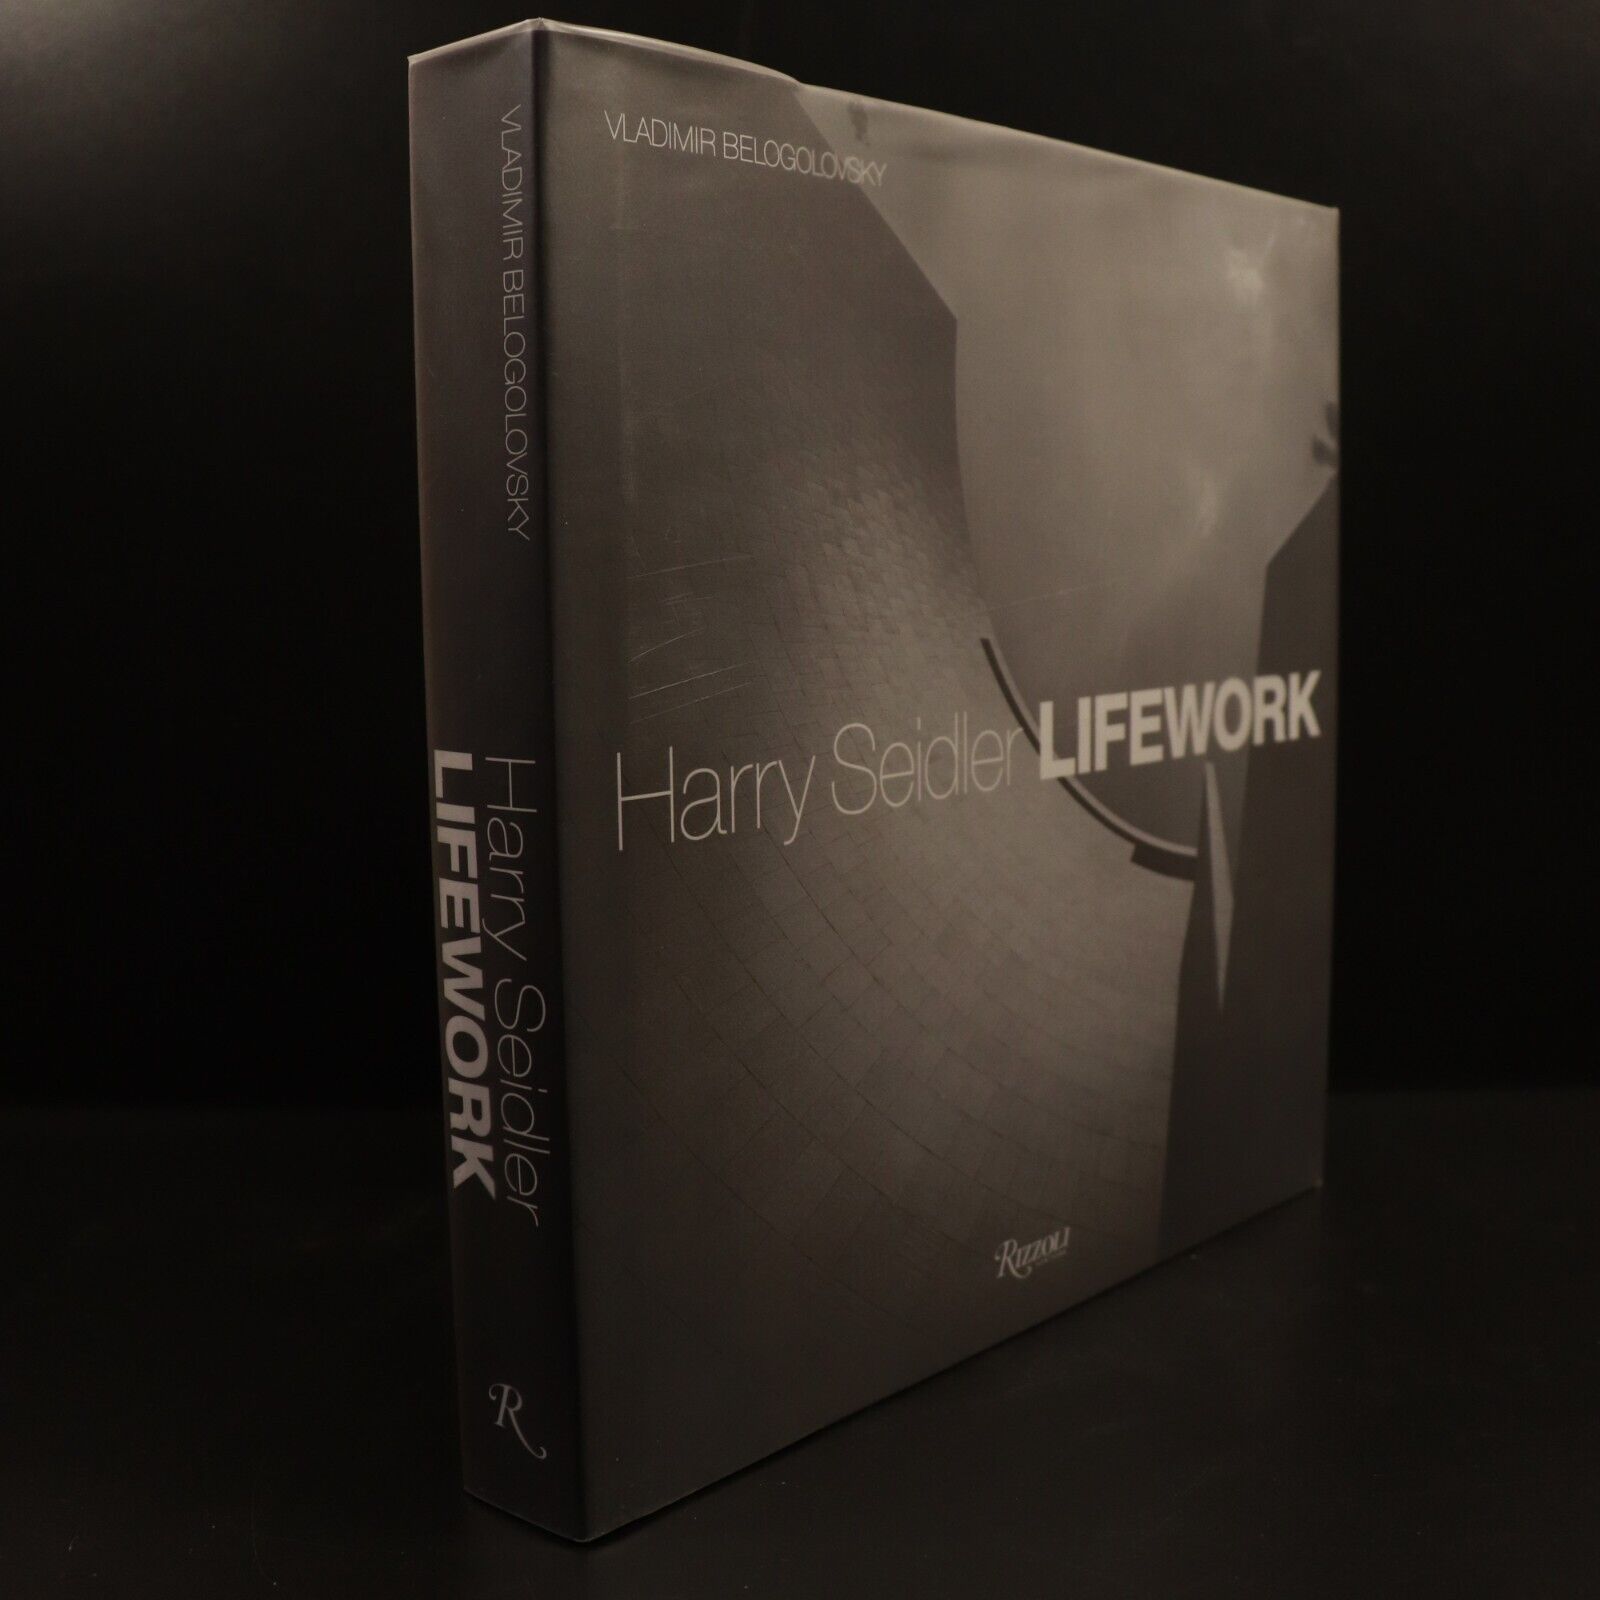 2014 Harry Seidler - Lifework by Vladimir Belogolovsky Architecture History Book